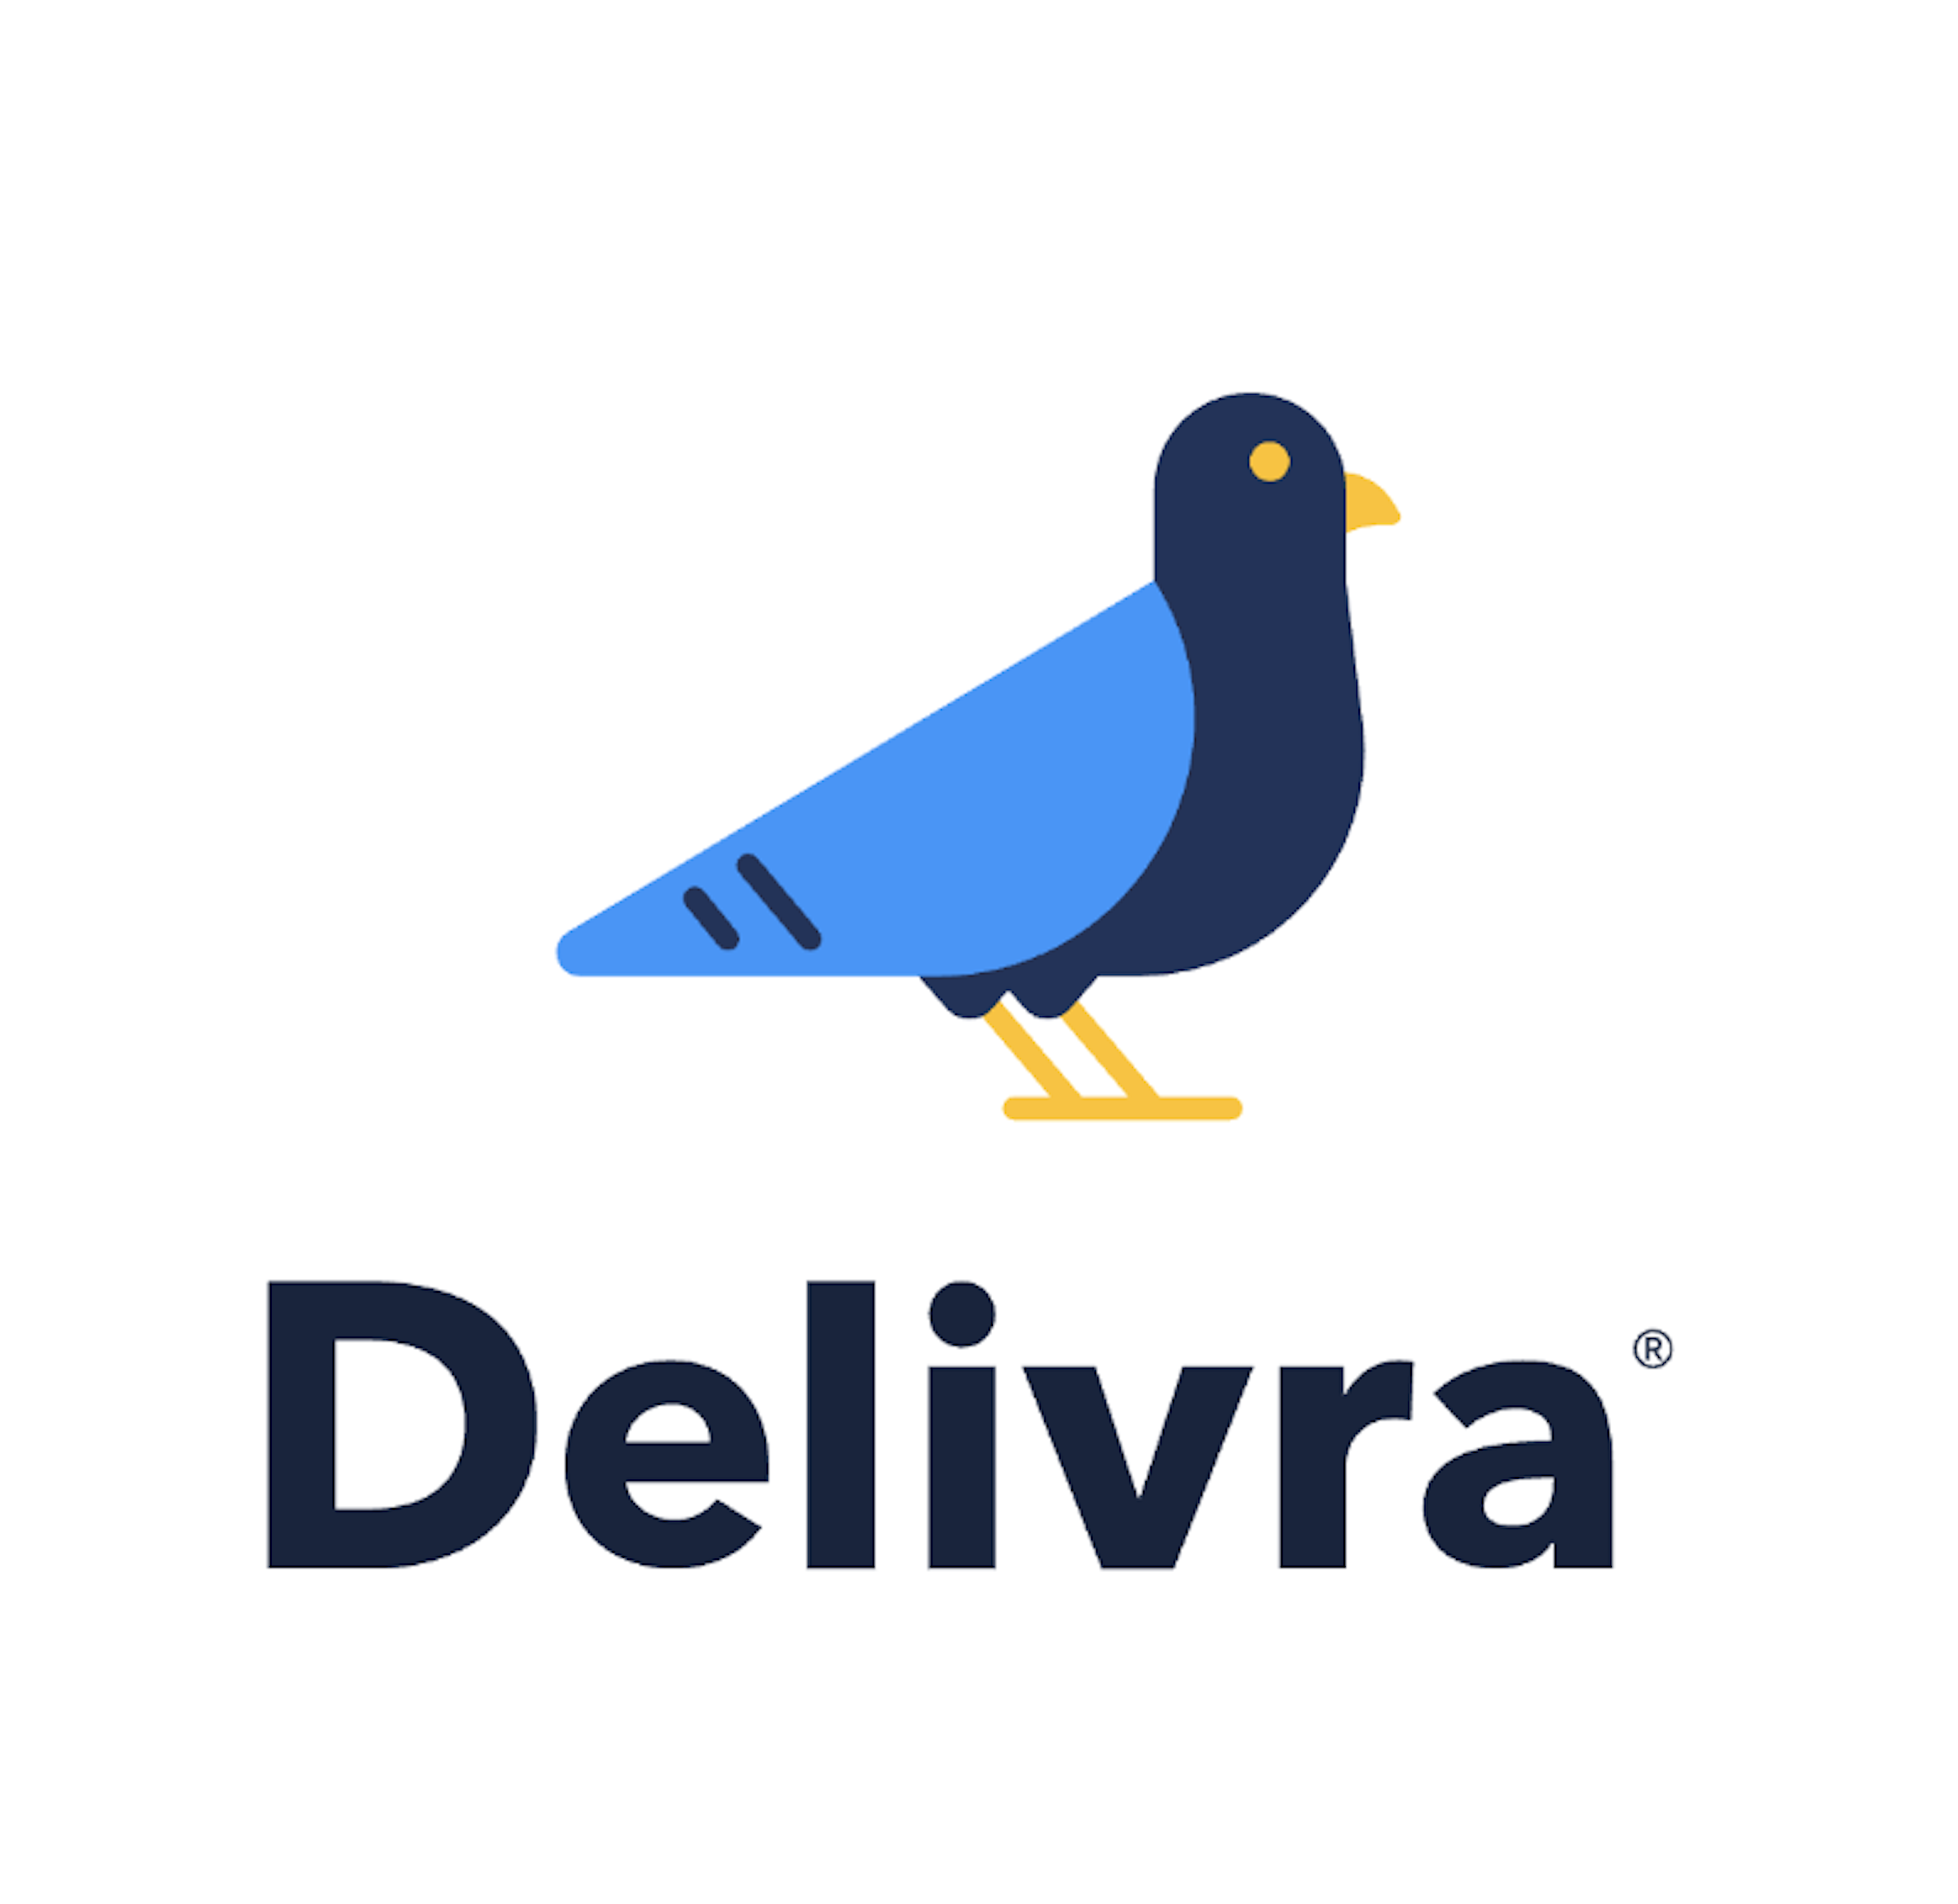 Delivra Logo